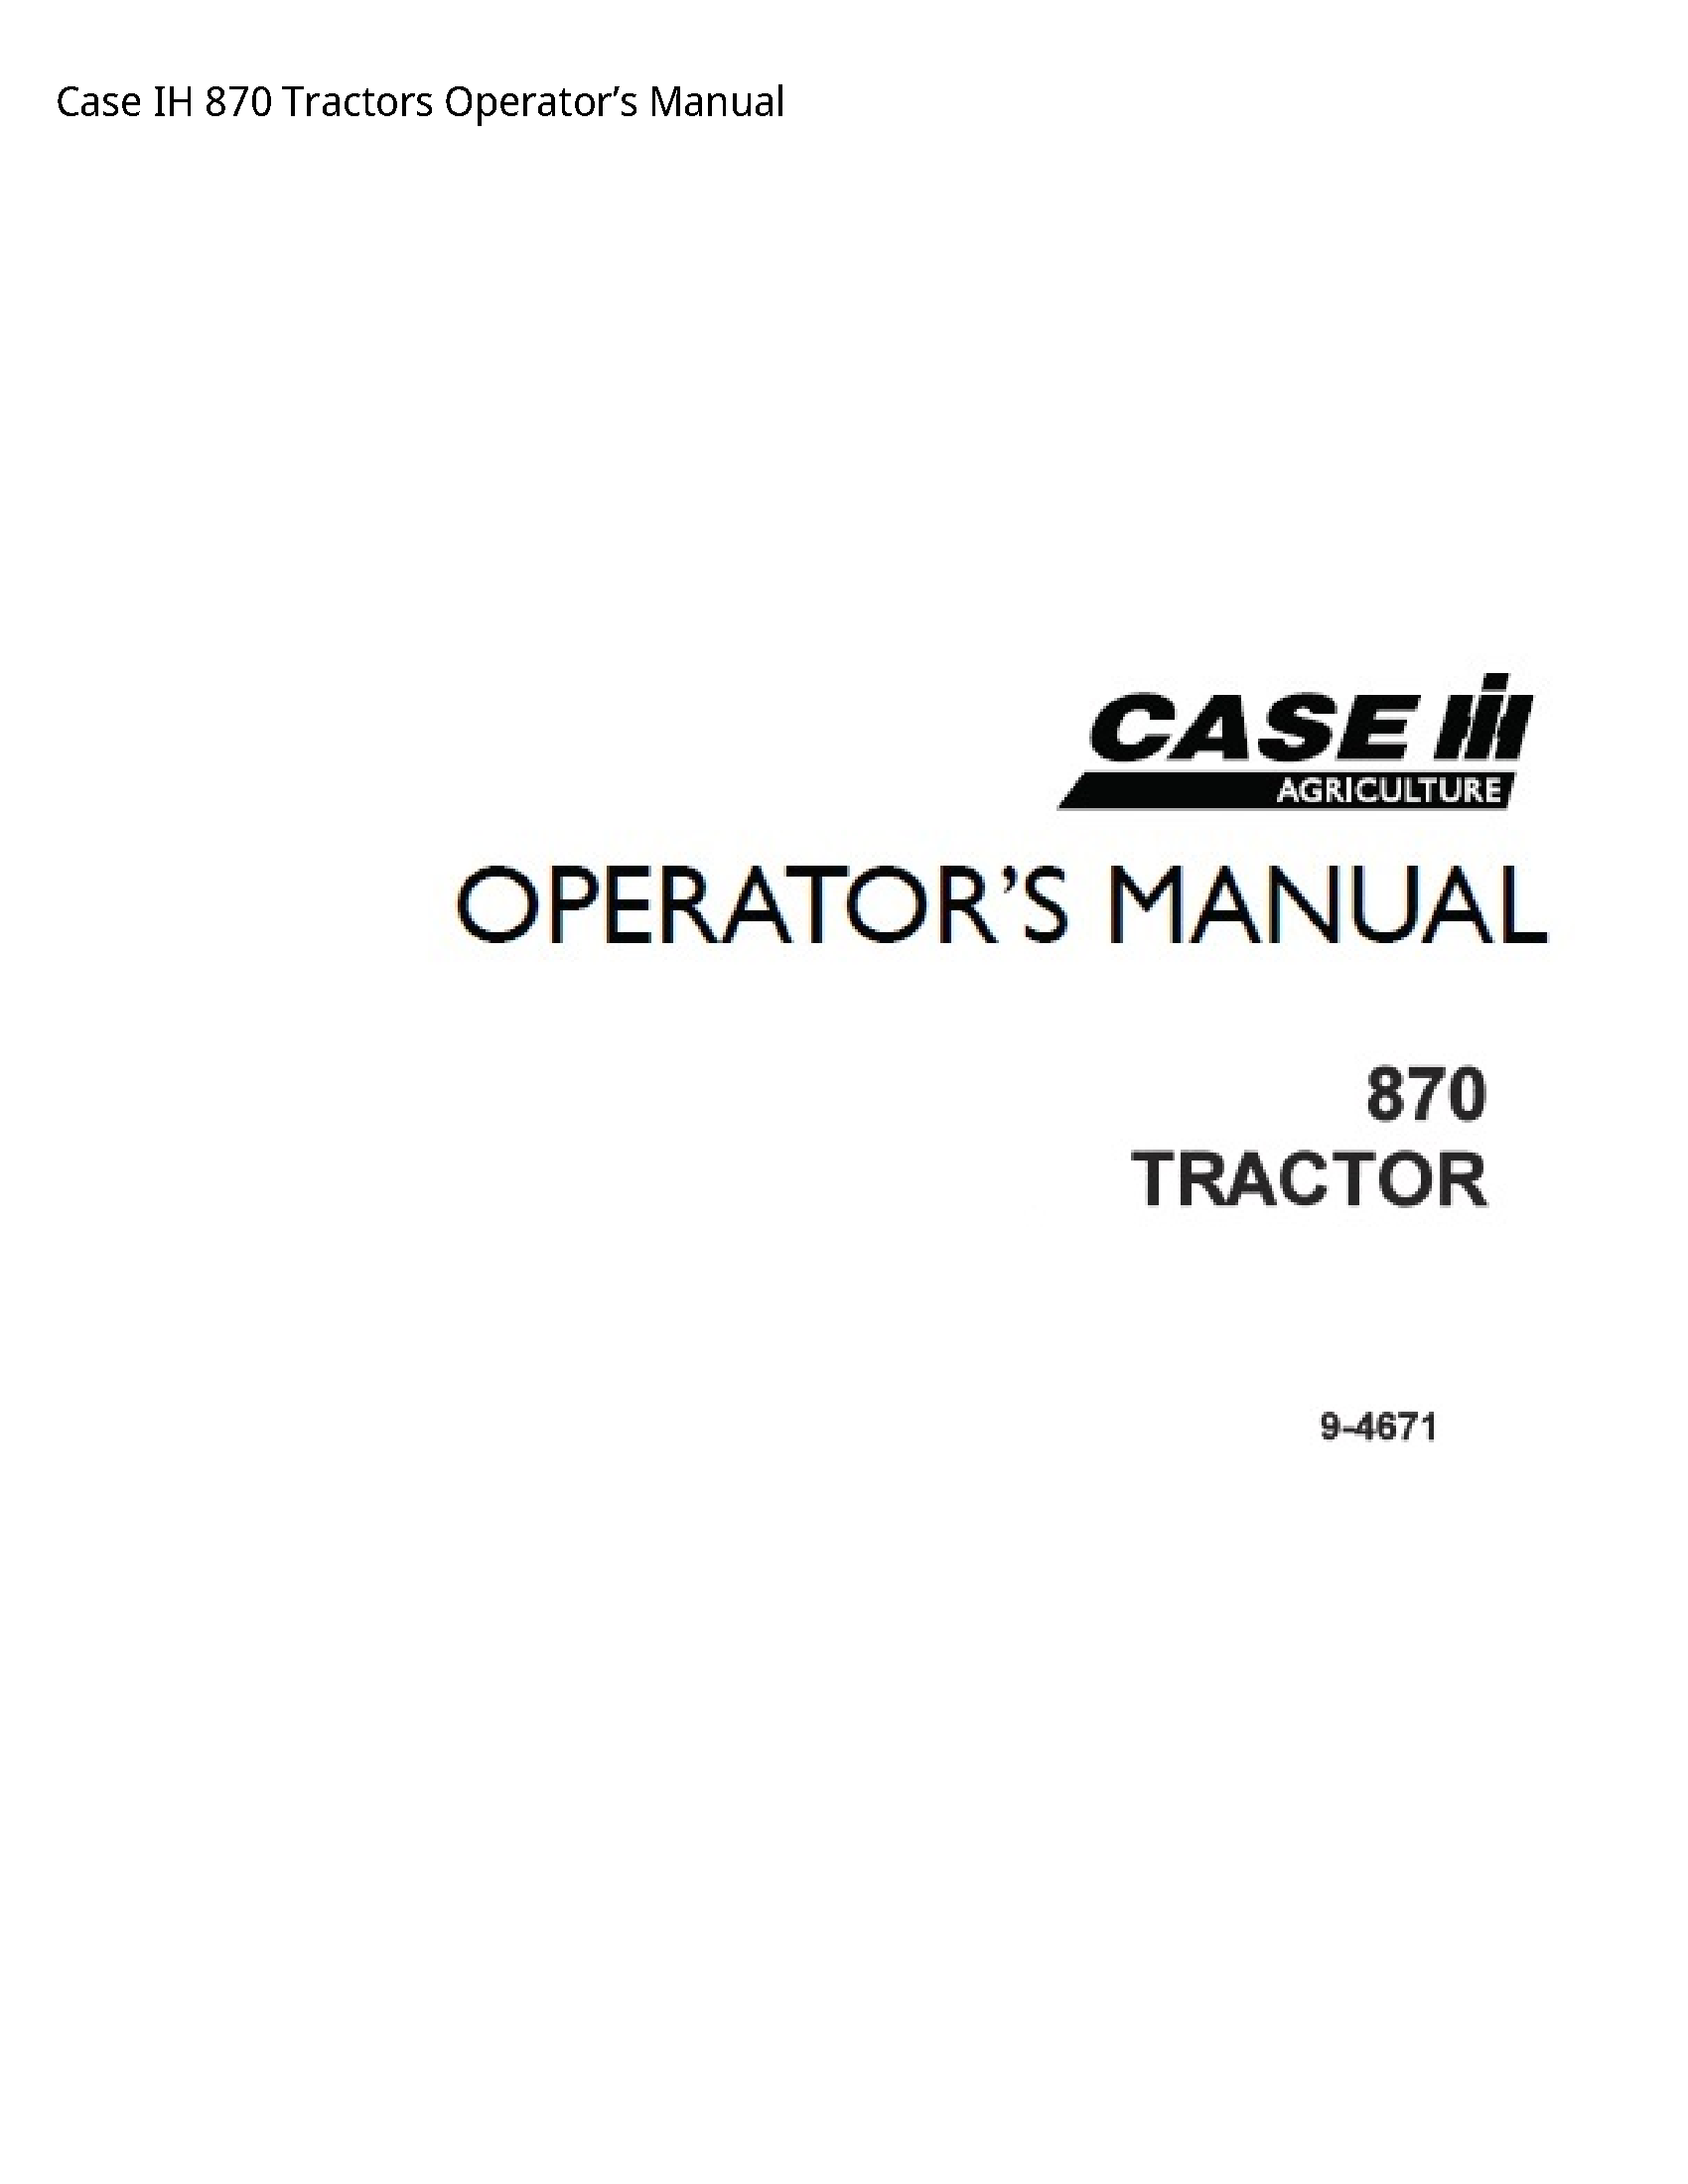 Case/Case IH 870 IH Tractors Operator’s manual